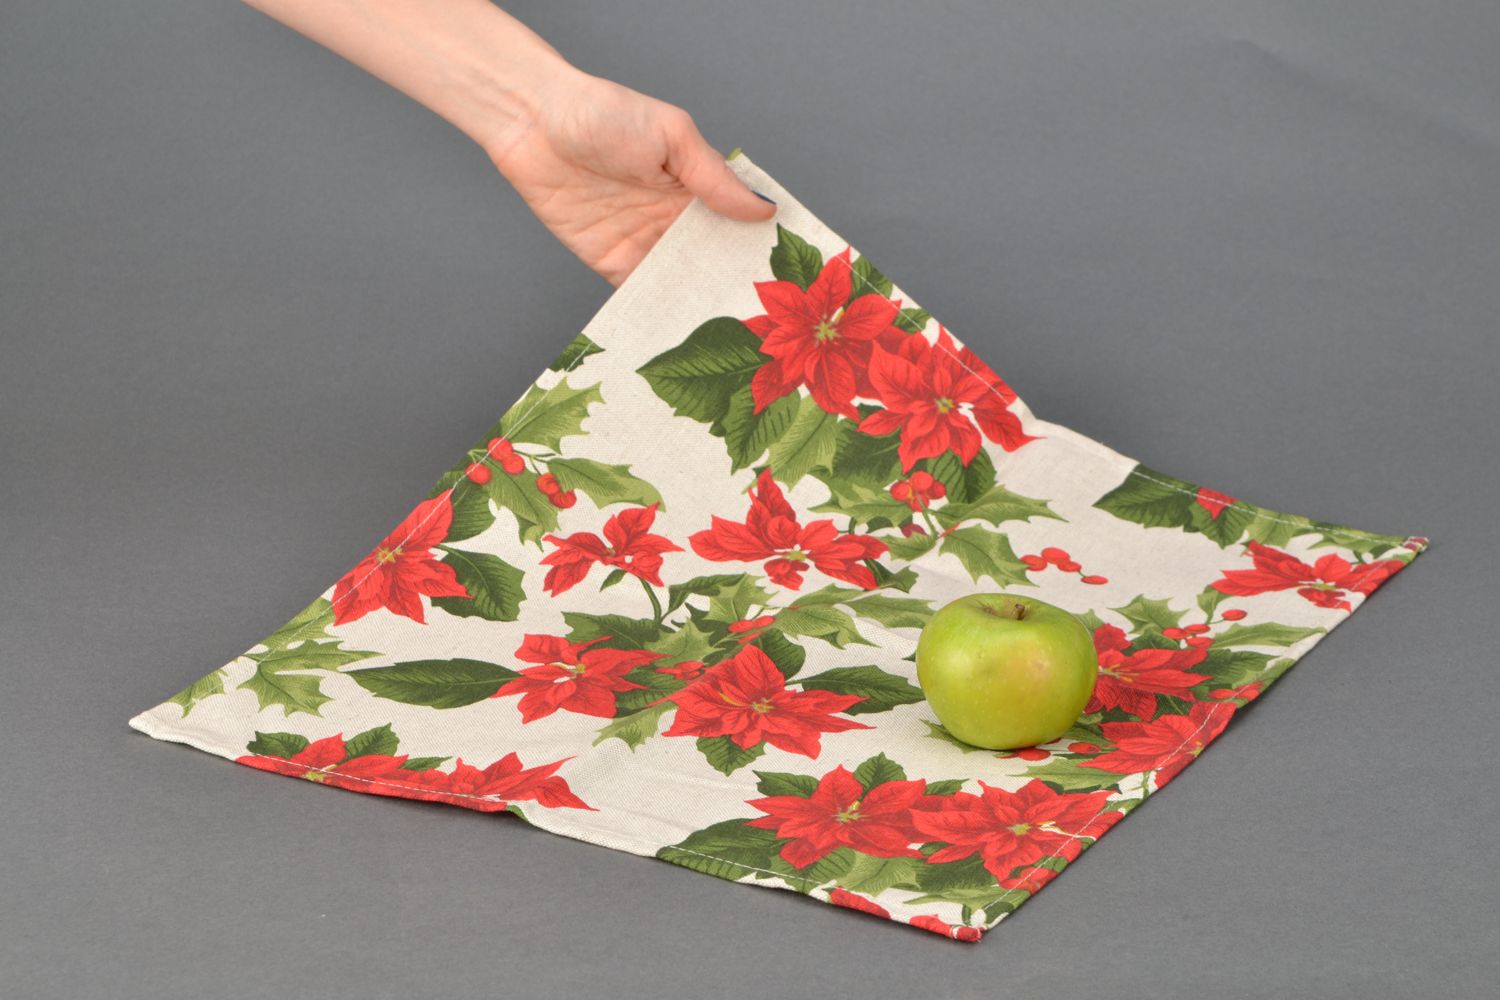 Decorative Christmas fabric napkin photo 2